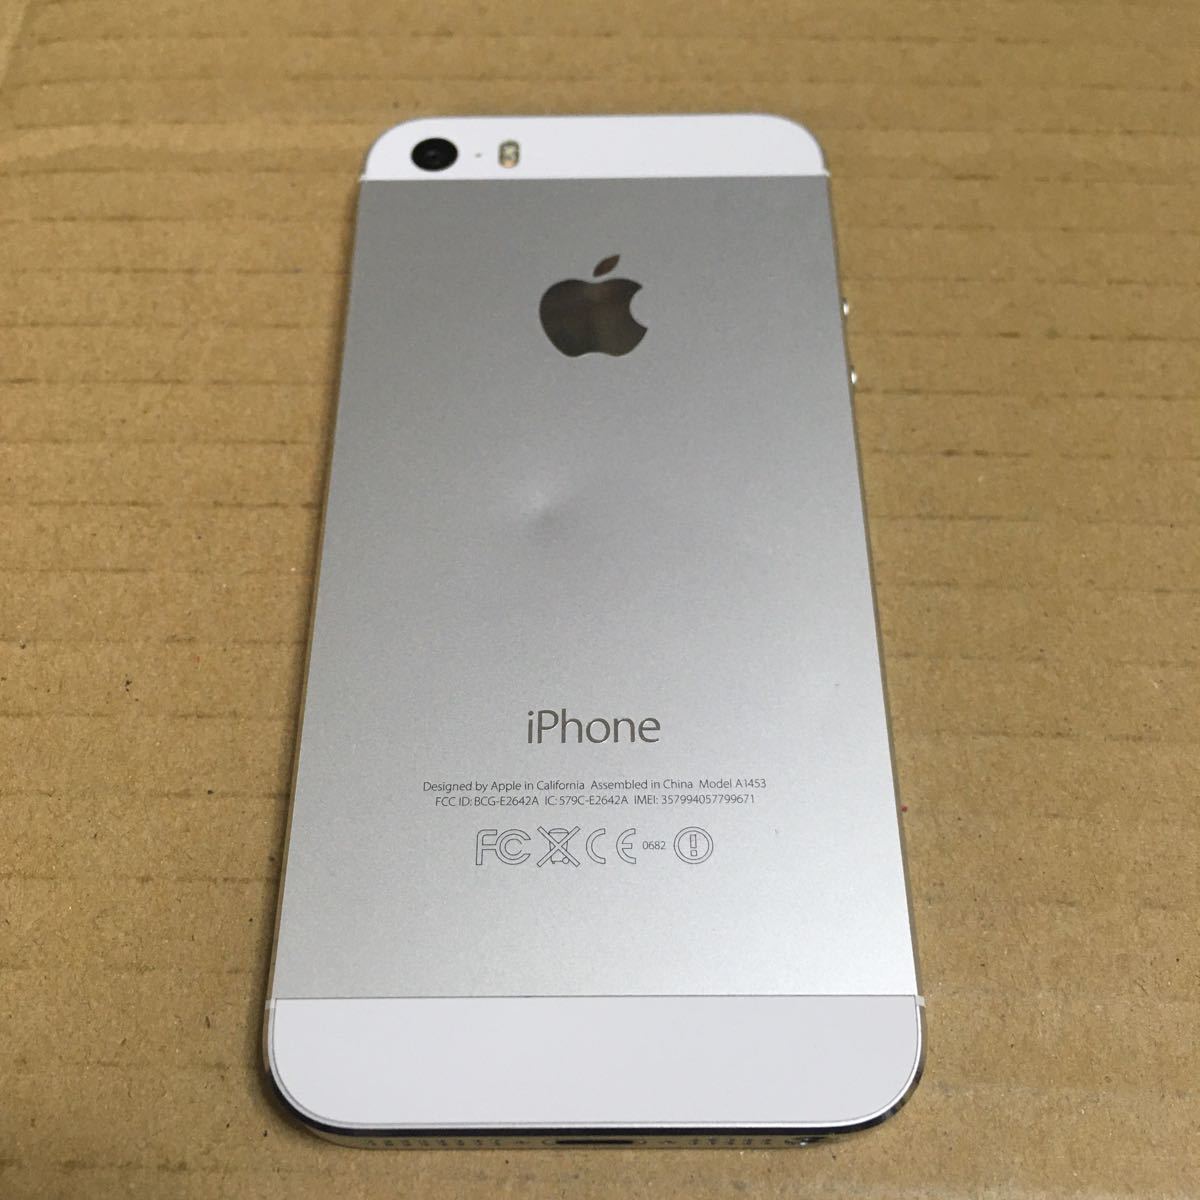 iPhone White 16 GB au ホワイト 完動品 白